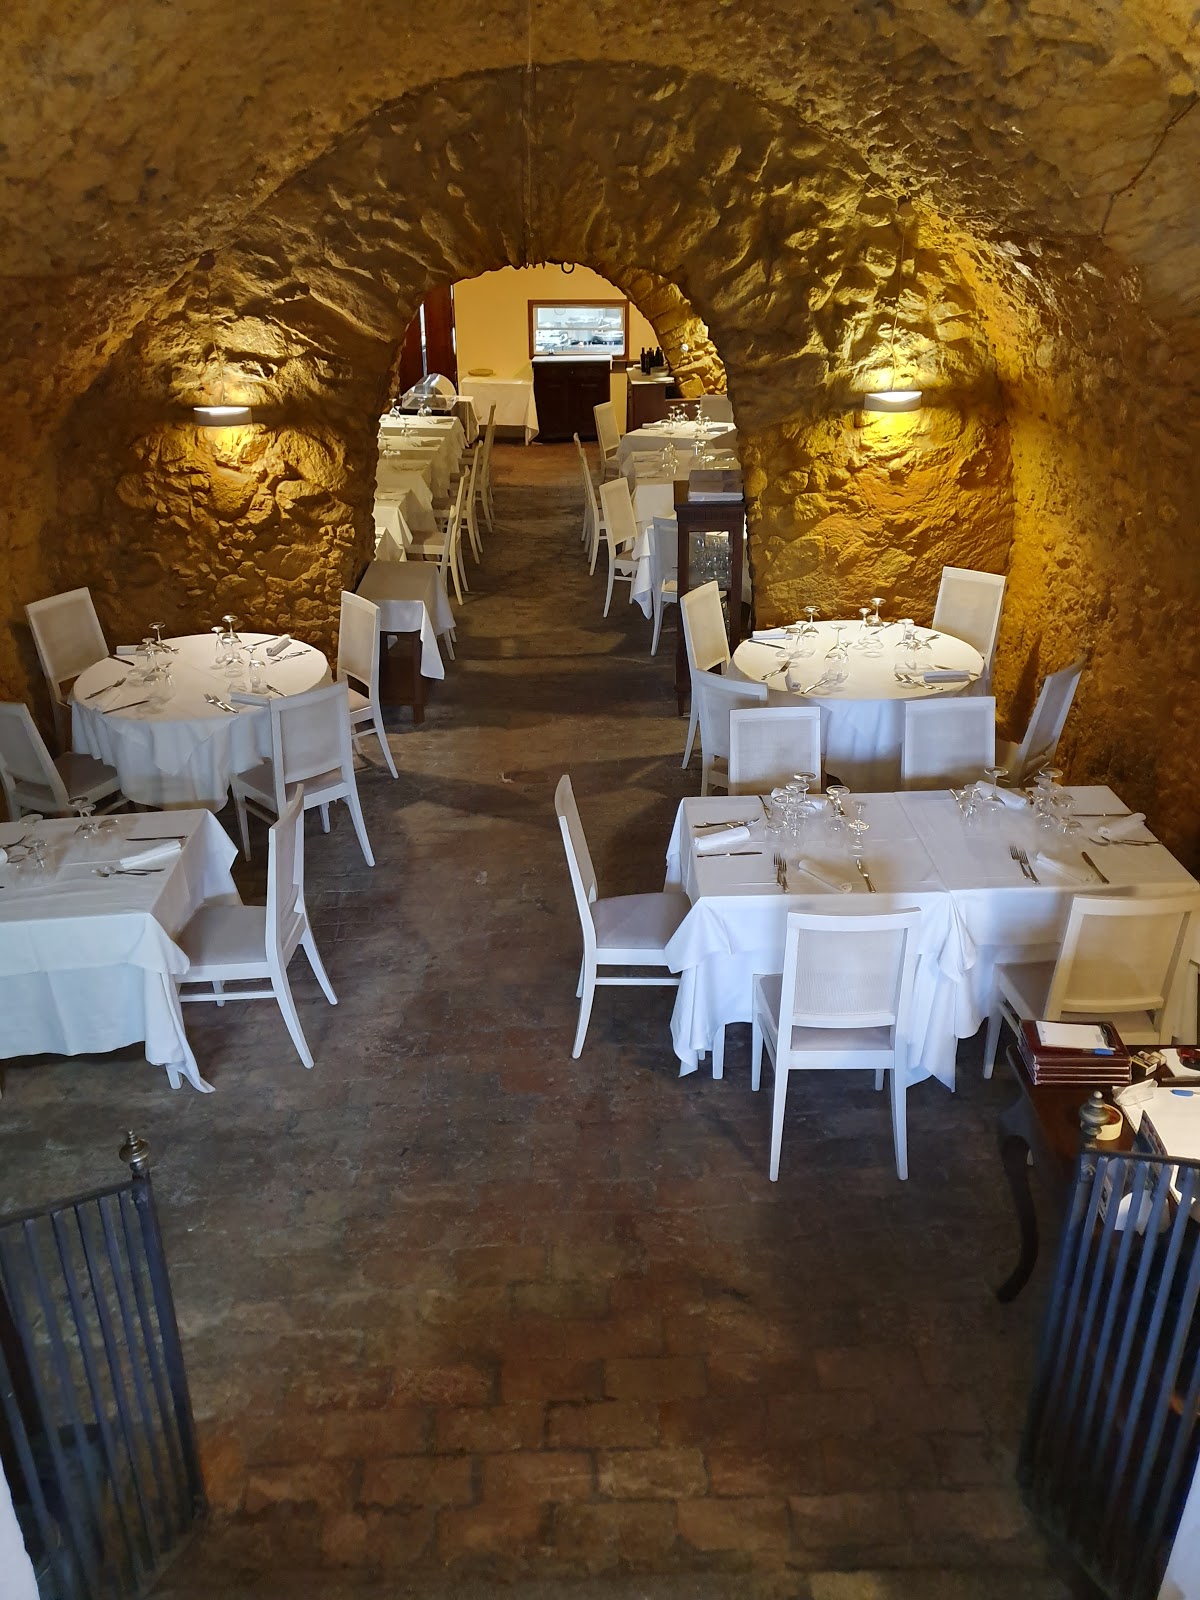 Foto di INCIPIT RESTAURANT - ristorante di pesce e cucina tipica mediterranea a Tropea